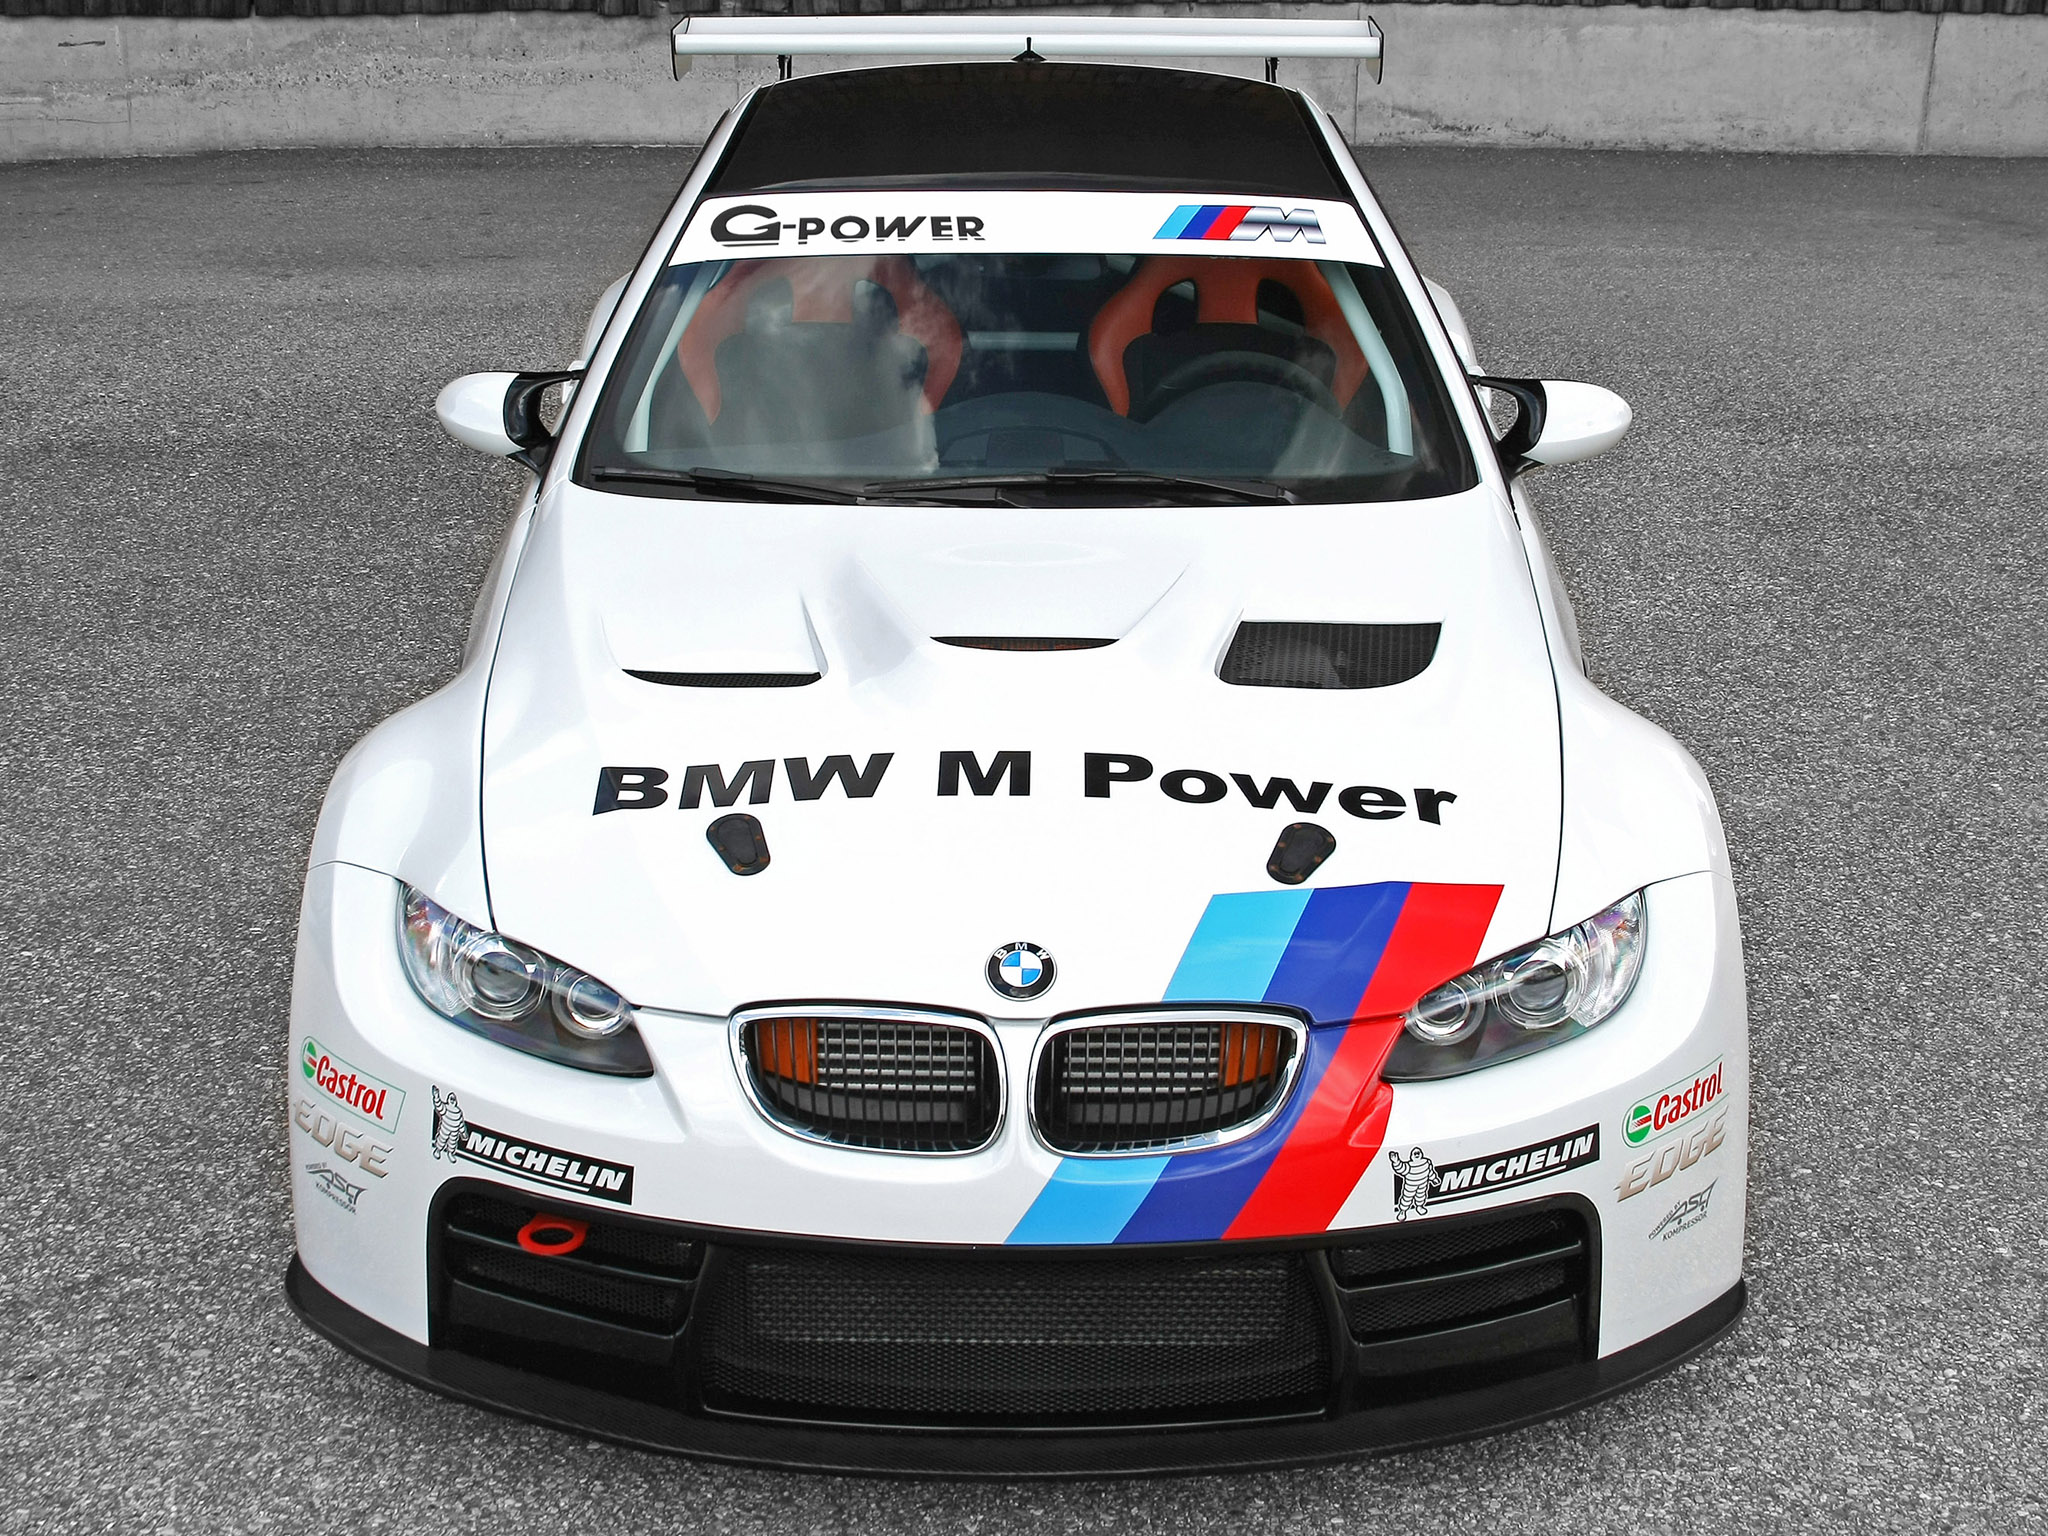 2013, G power, Bmw, M3, Gt2 r, E92, Gt2, Tuning, Race, Racing Wallpaper